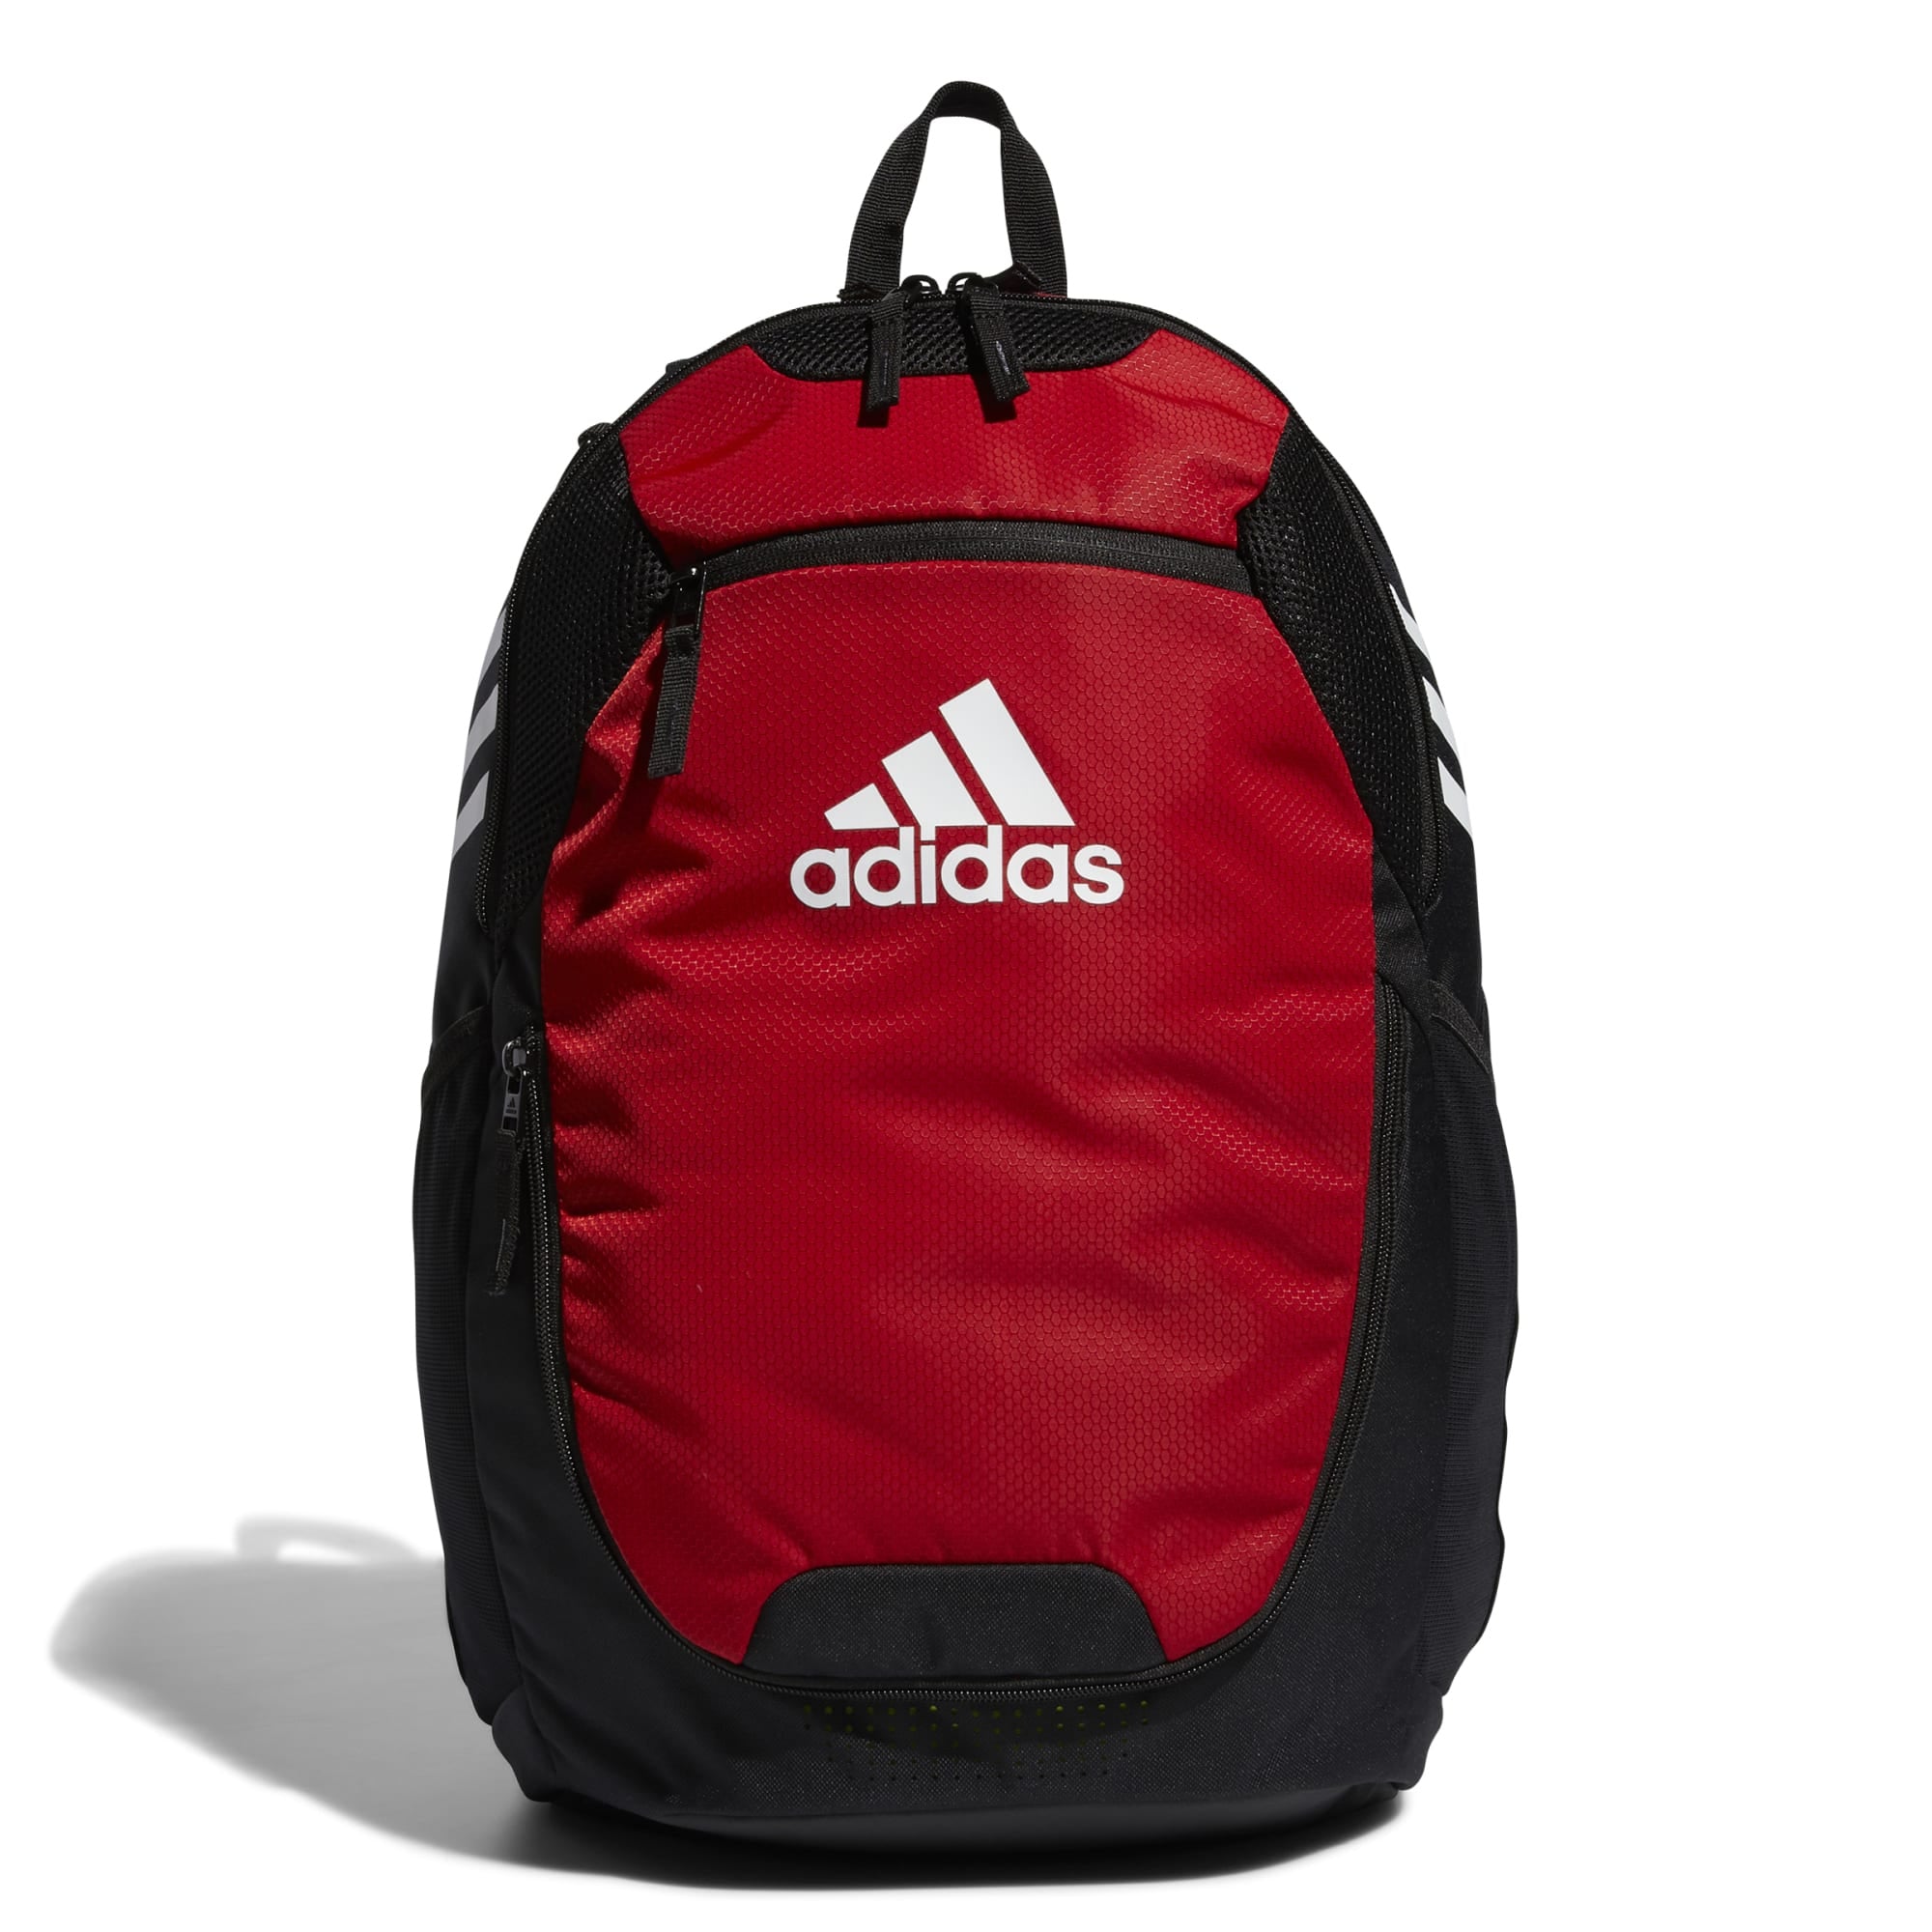 Adidas Stadium 3 Backpack Red - FZ6792